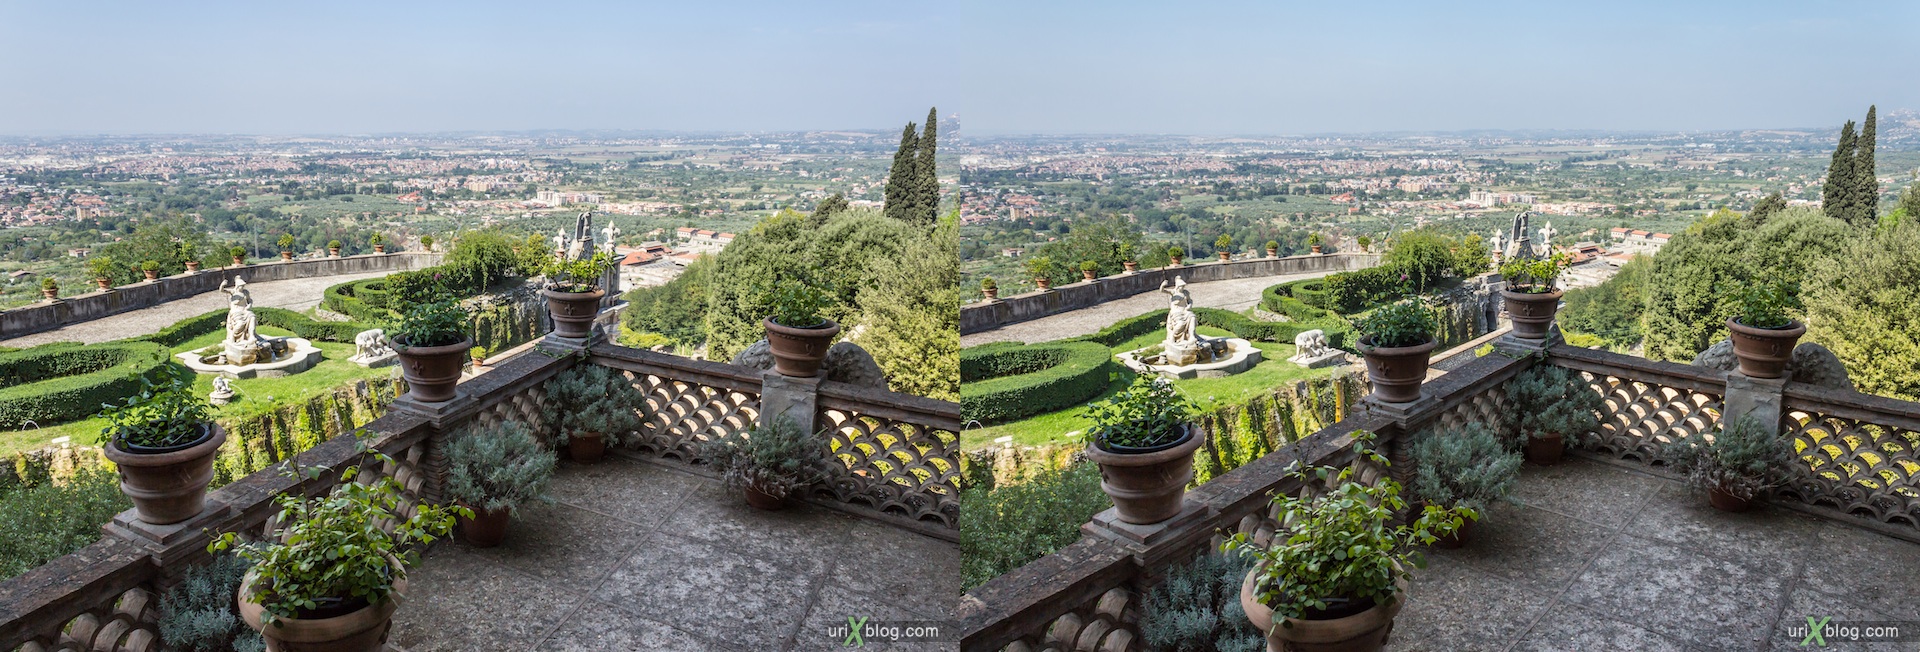 2012, Fontana della Rometta, villa D'Este, Italy, Tivoli, Rome, 3D, stereo pair, cross-eyed, crossview, cross view stereo pair